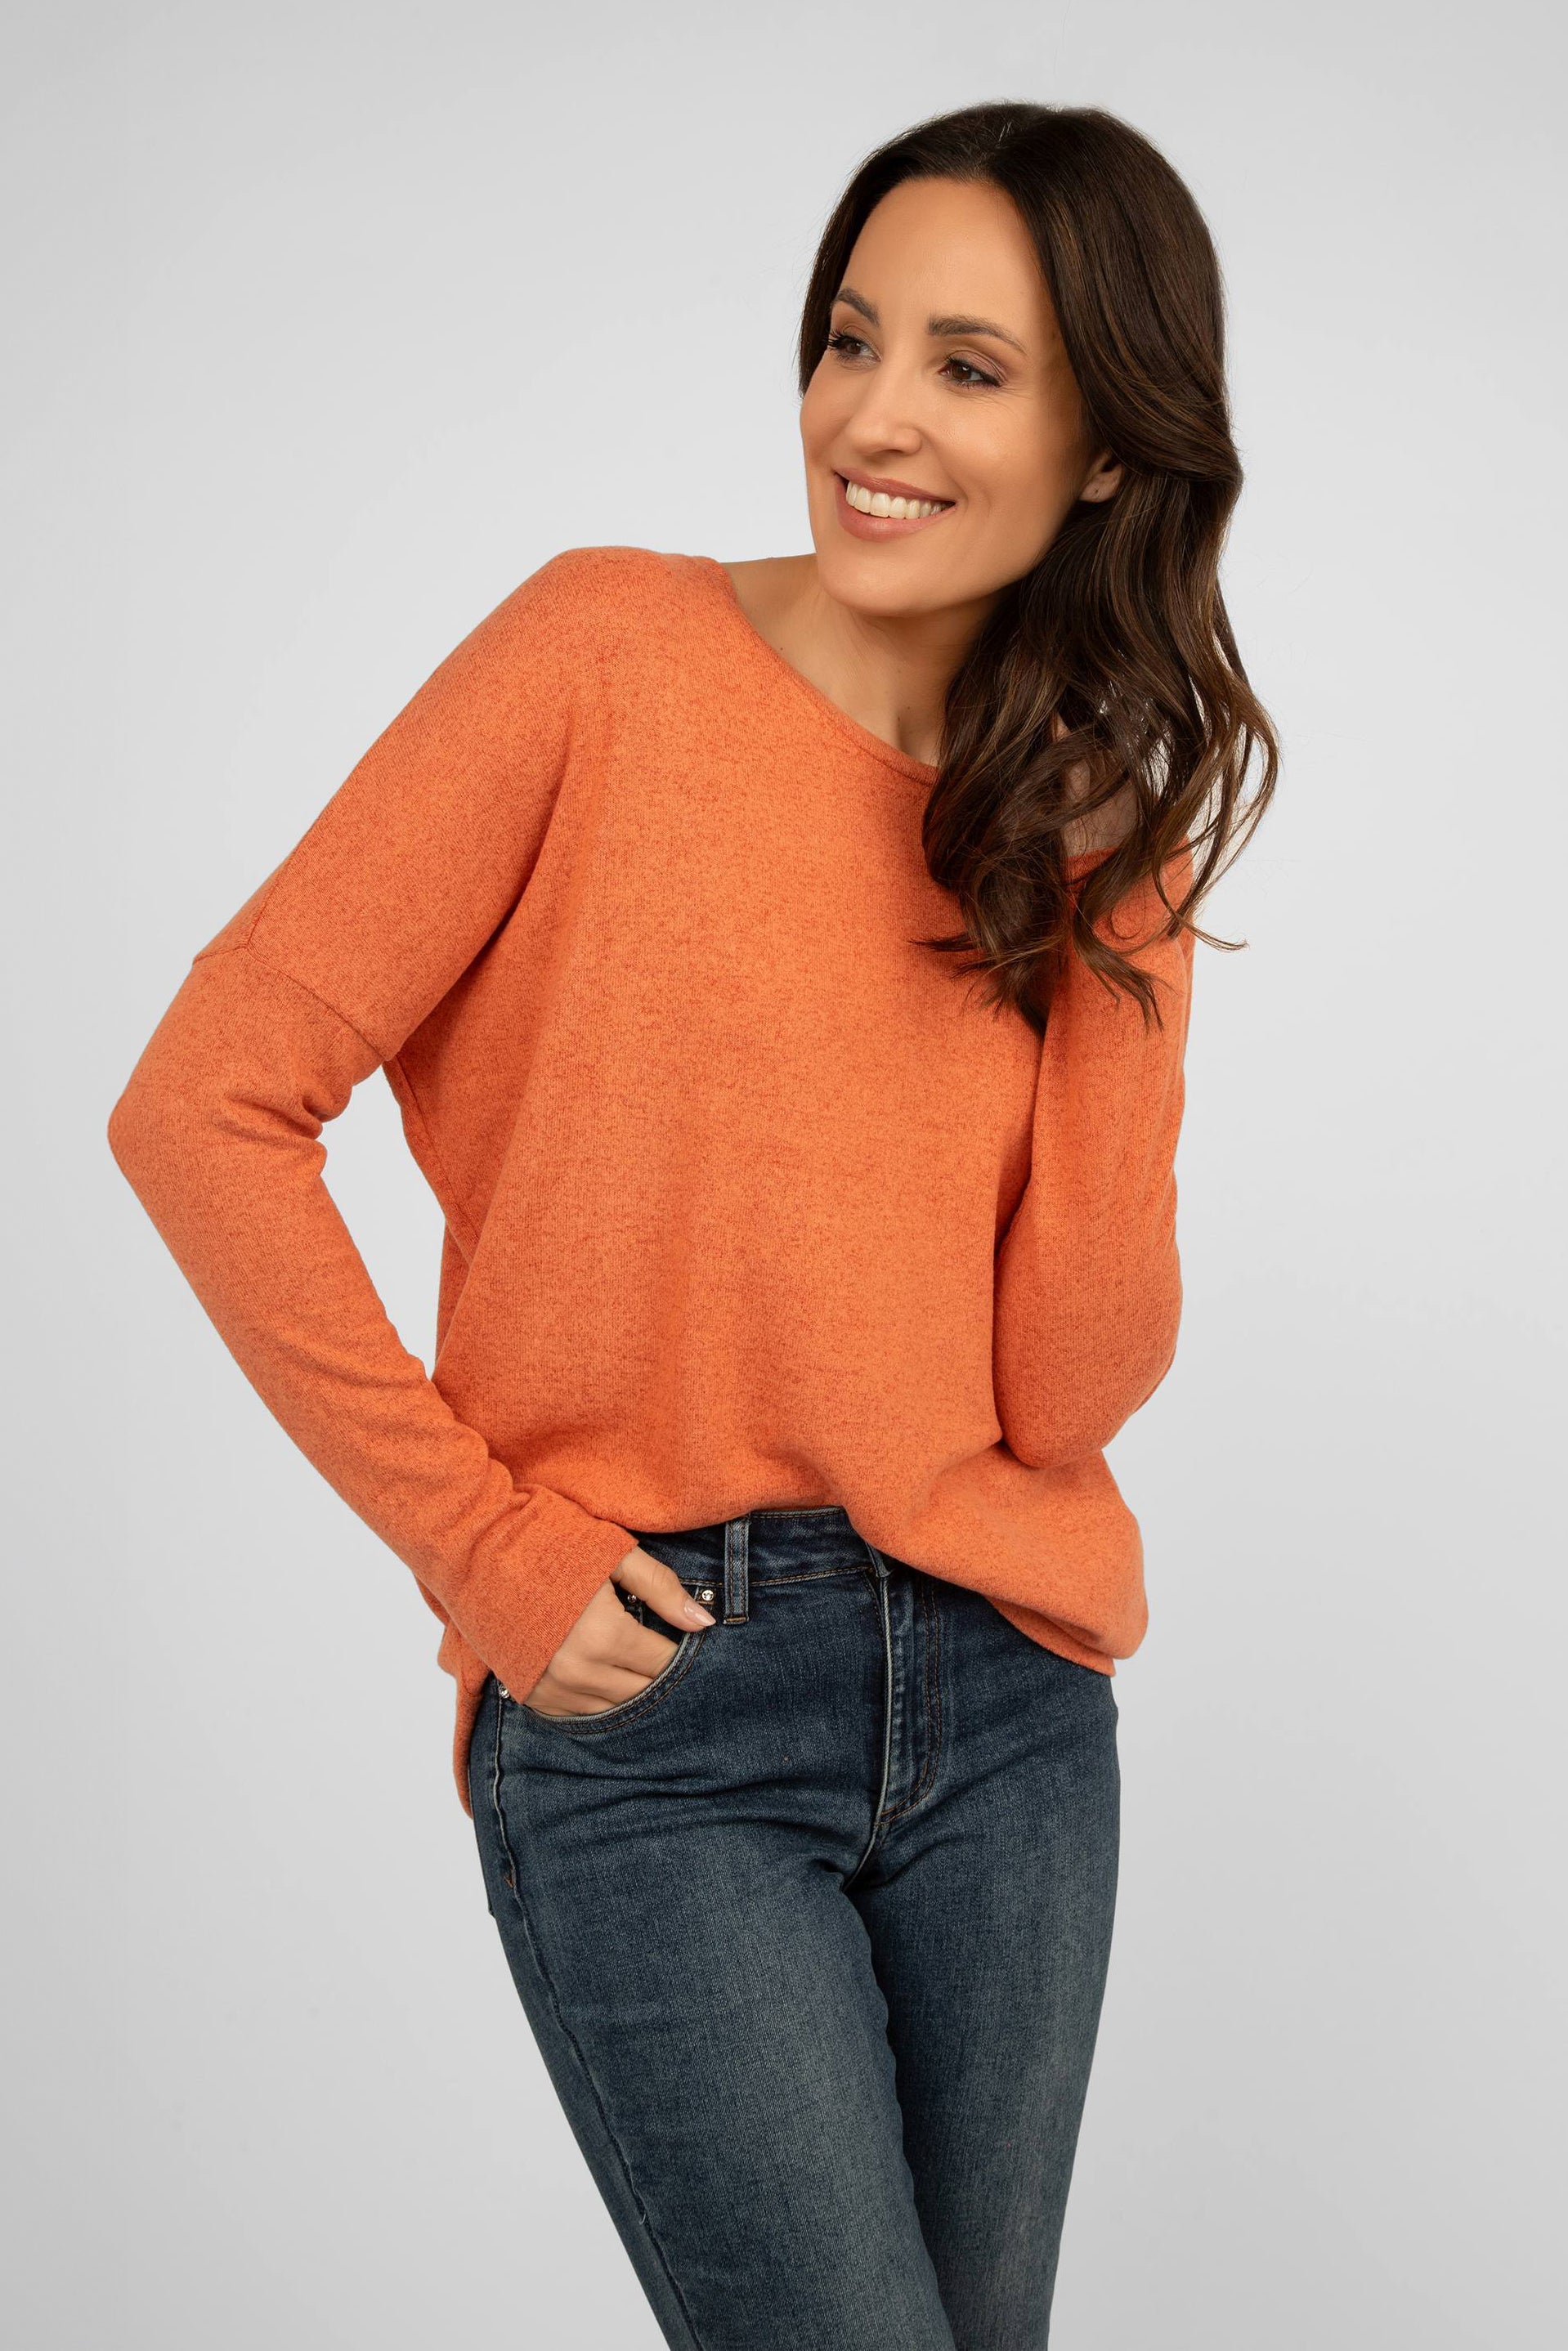 Soya Concept (24788S4) Women's Long Sleeve Brushed Knit Top in Dusty Clay Orange